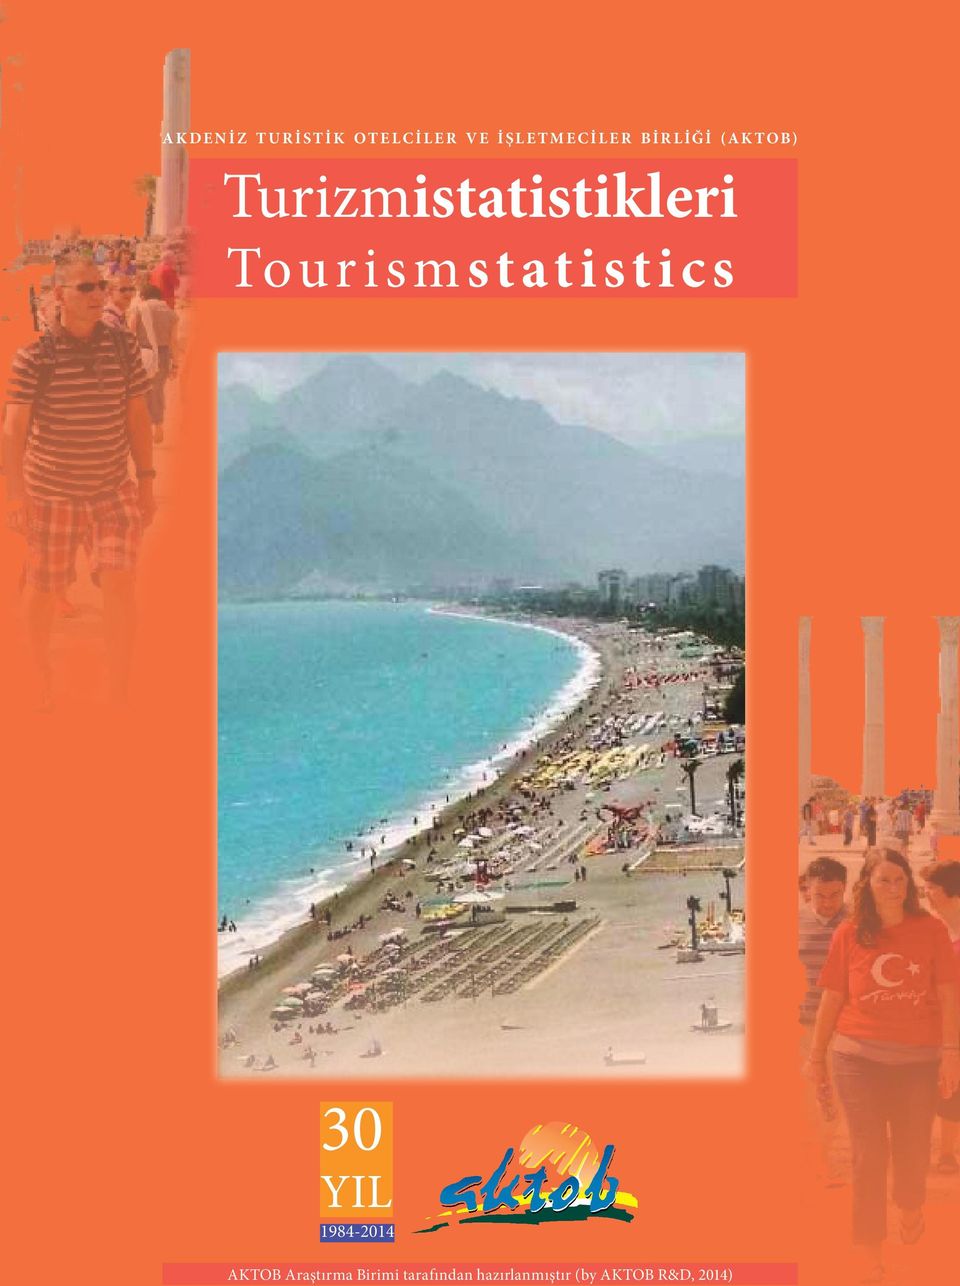 Tourismstatistics 30 YIL 1984-2014 AKTOB